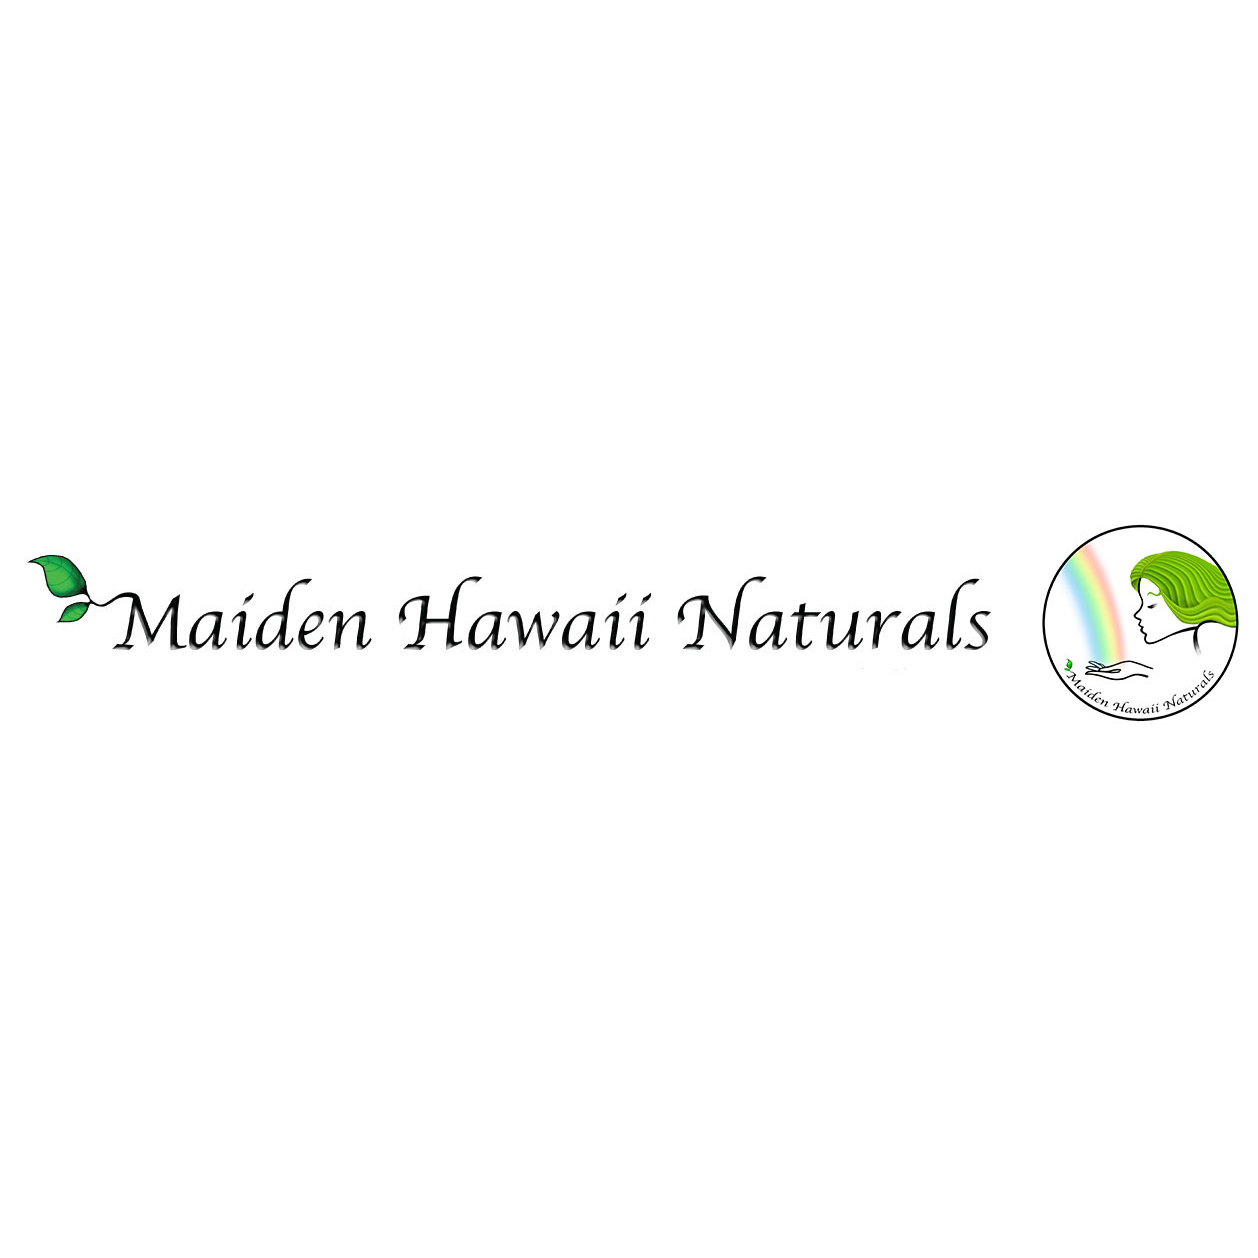 Maiden Hawaii Naturals